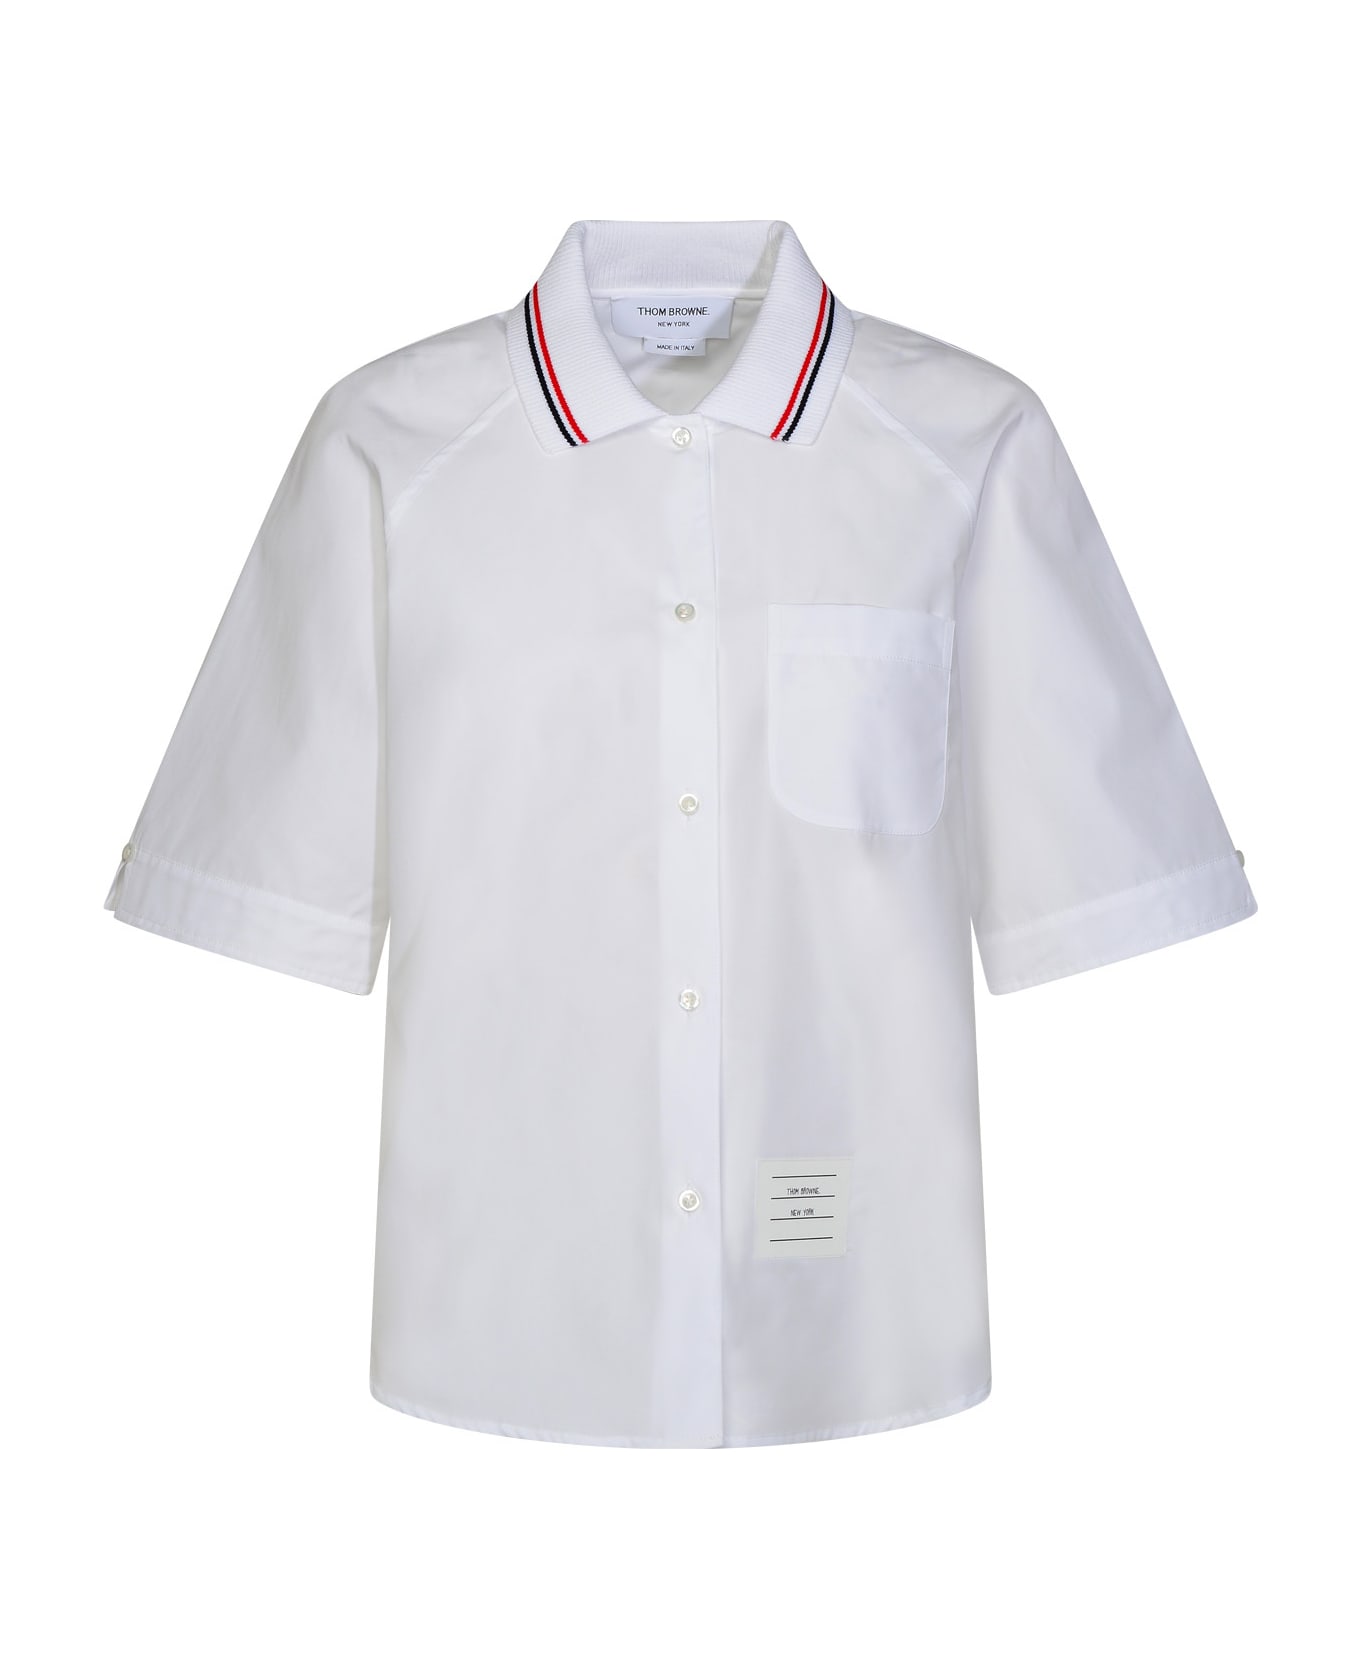 Thom Browne White Cotton Shirt - White シャツ